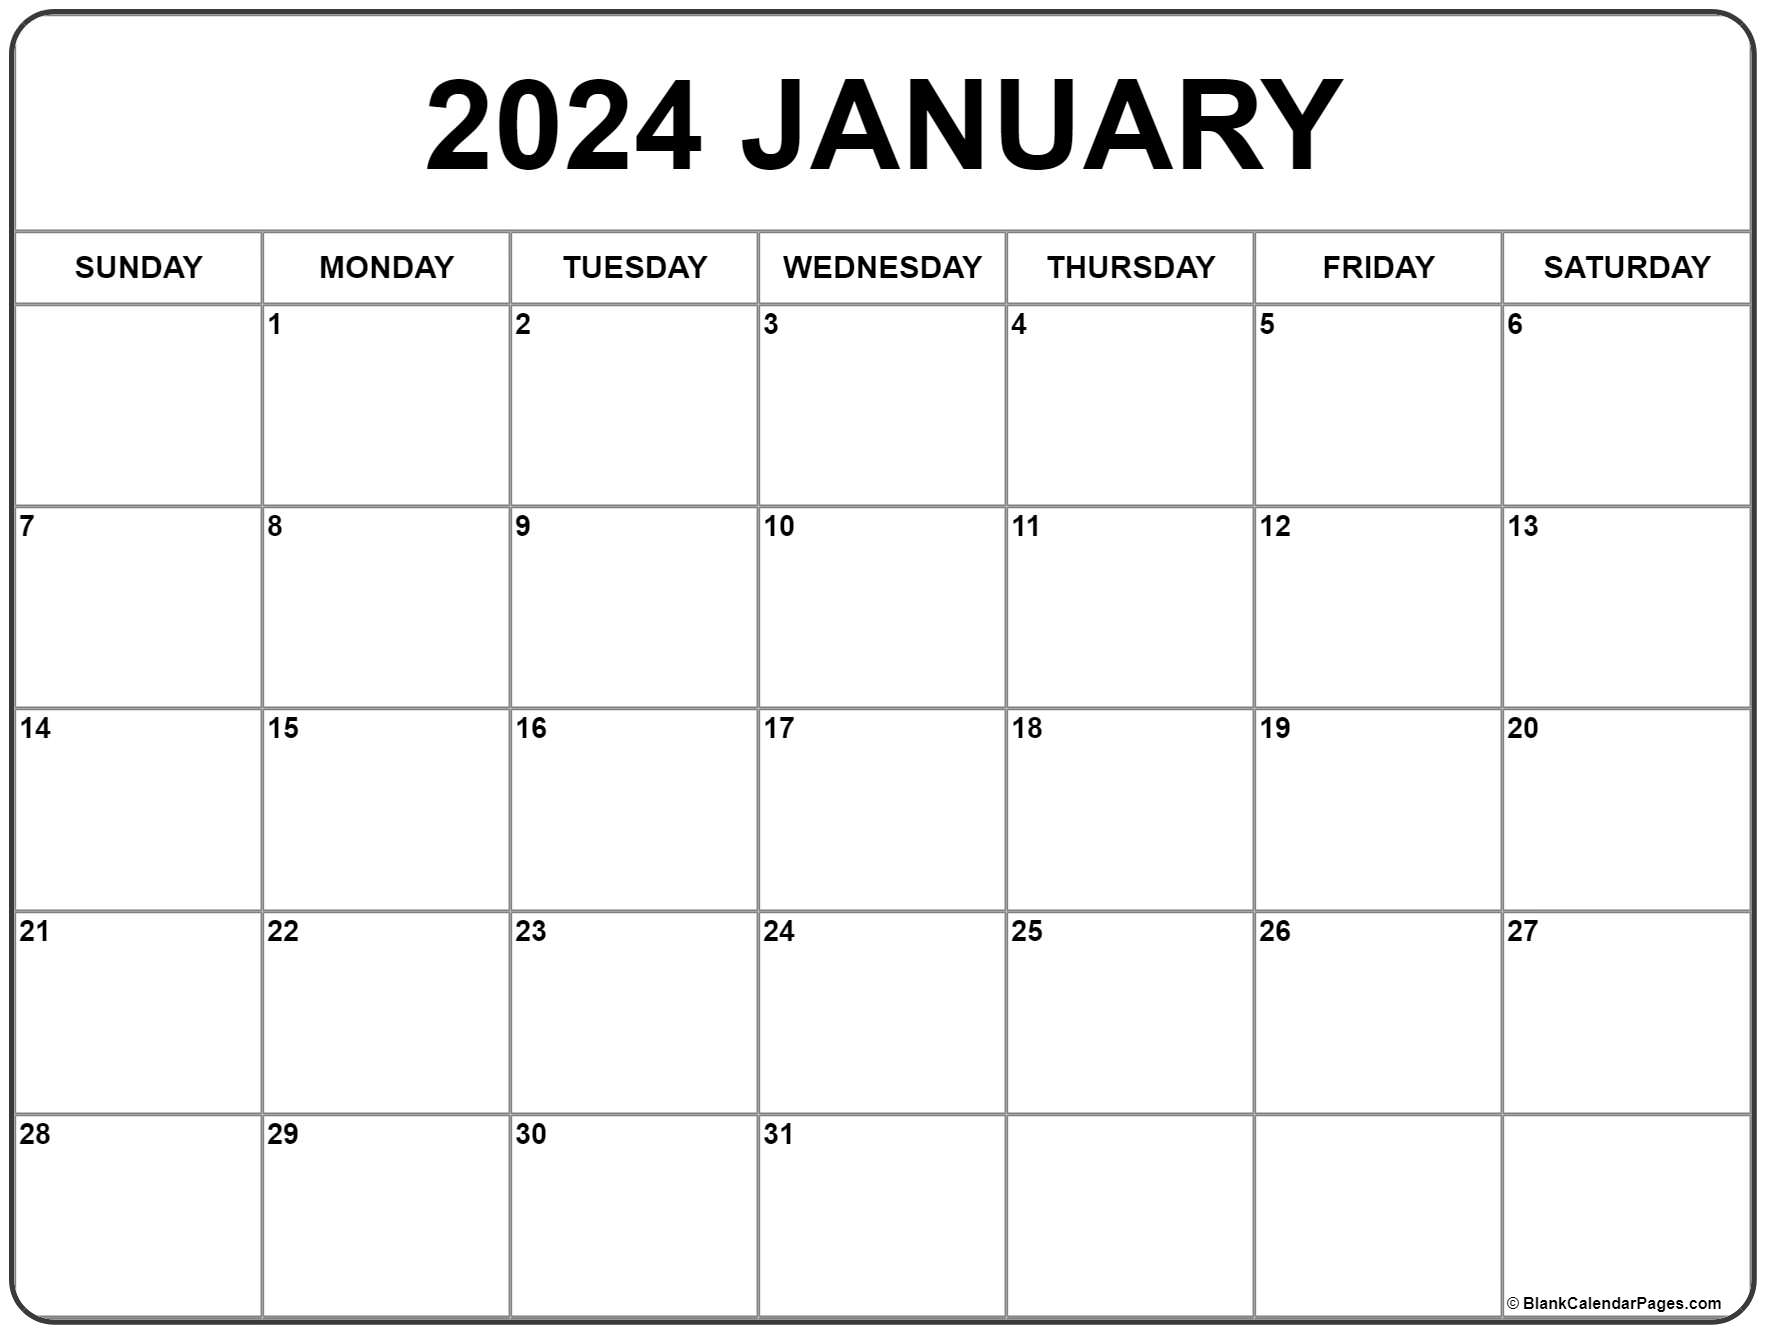 January 2024 Calendar | Free Printable Calendar for January February Calendar 2024 Printable